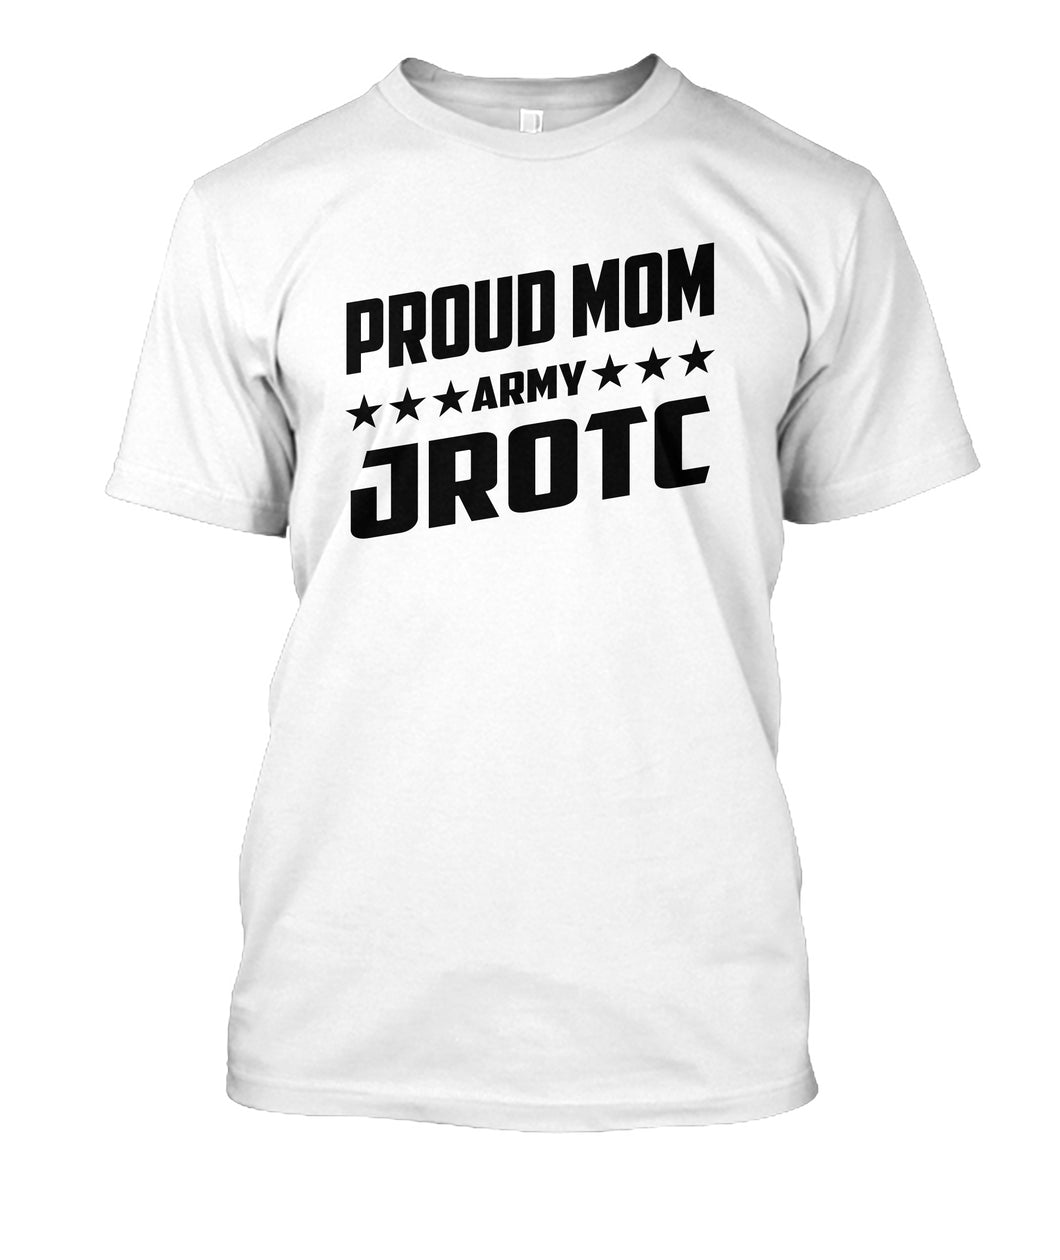 Proud Parent of a JROTC Cadet